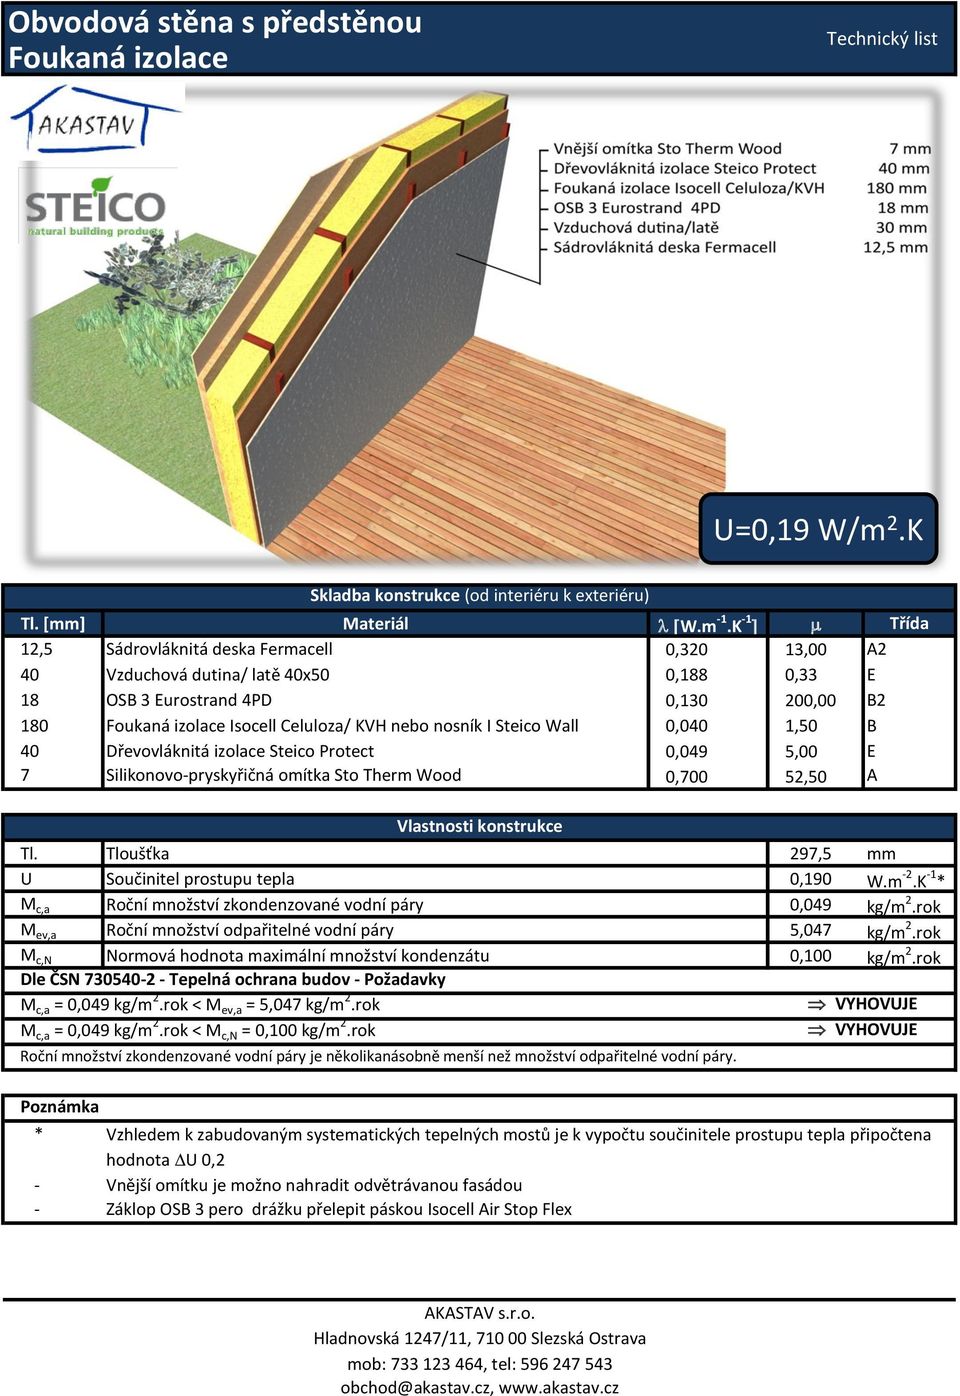 Dřevovláknitá izolace Steico Protect 0,049 5,00 E 7 Silikonovopryskyřičná omítka Sto Therm Wood 0,700 52,50 A Tl. Tloušťka 297,5 mm U Součinitel prostupu tepla 0,190 W.m 2.